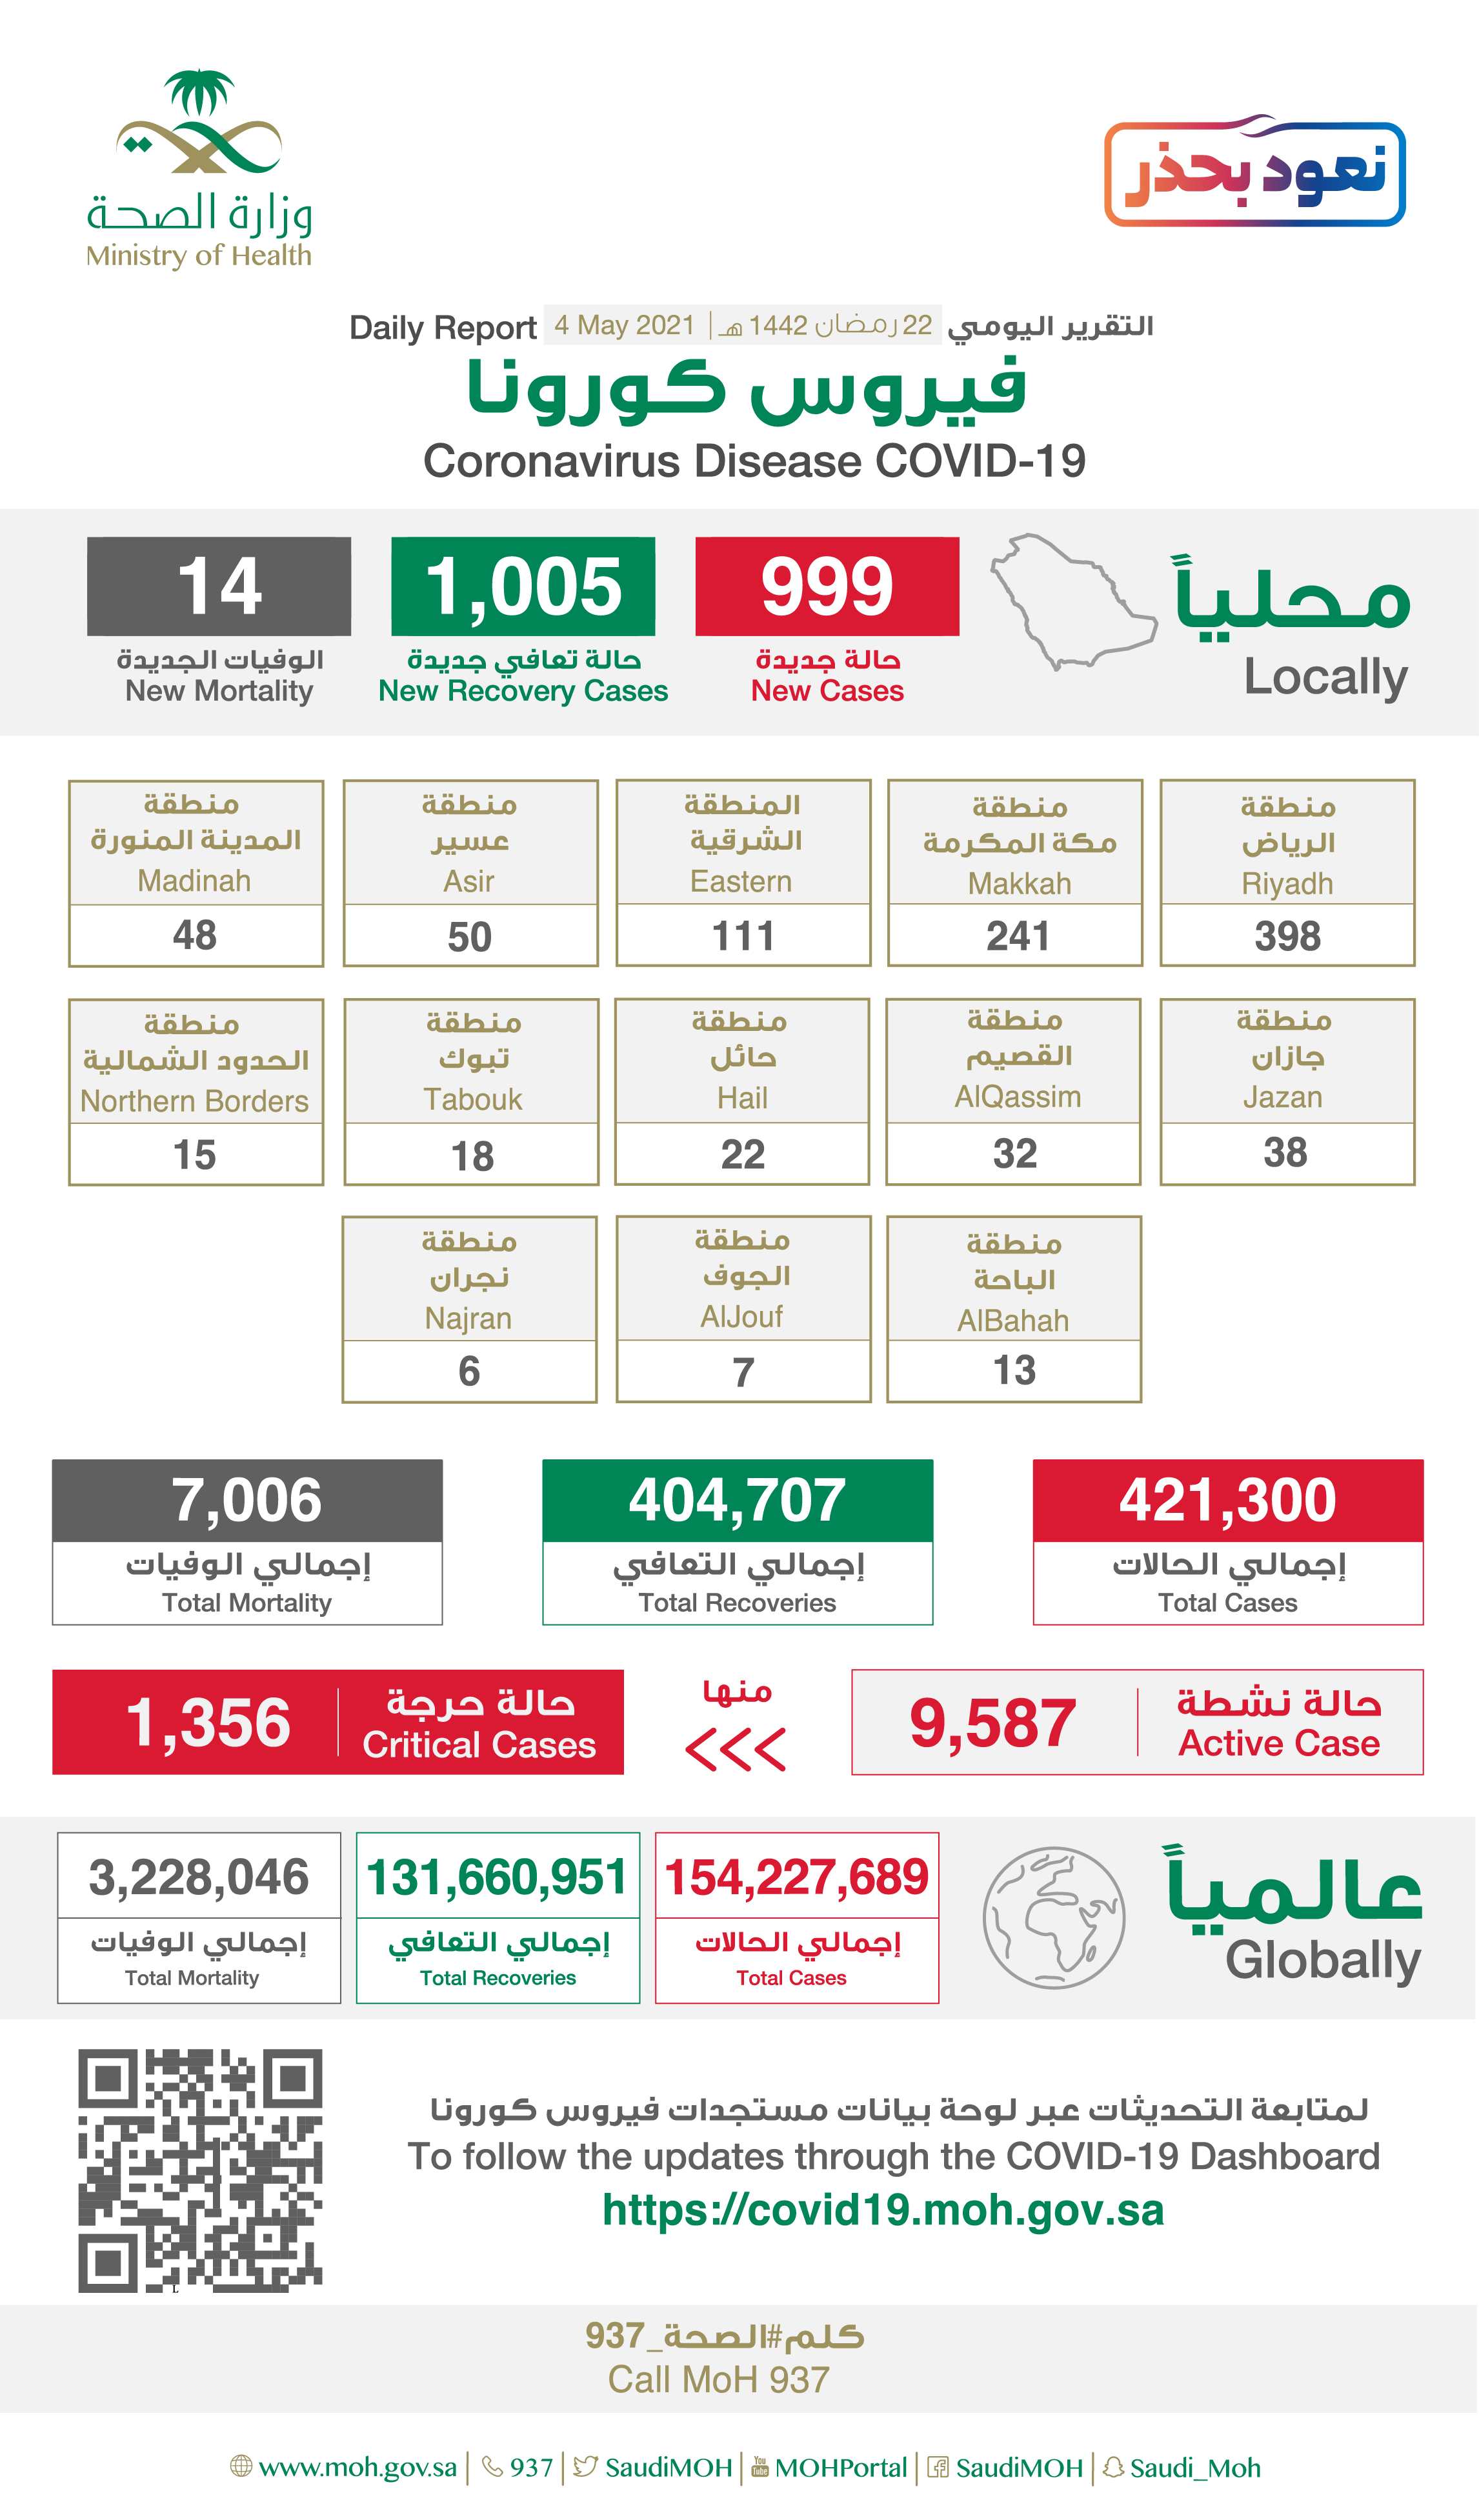 Saudi Arabia Coronavirus : Total Cases :421,300 , New Cases : 999 , Cured : 404,707 , Deaths: 7,006, Active Cases : 9,587